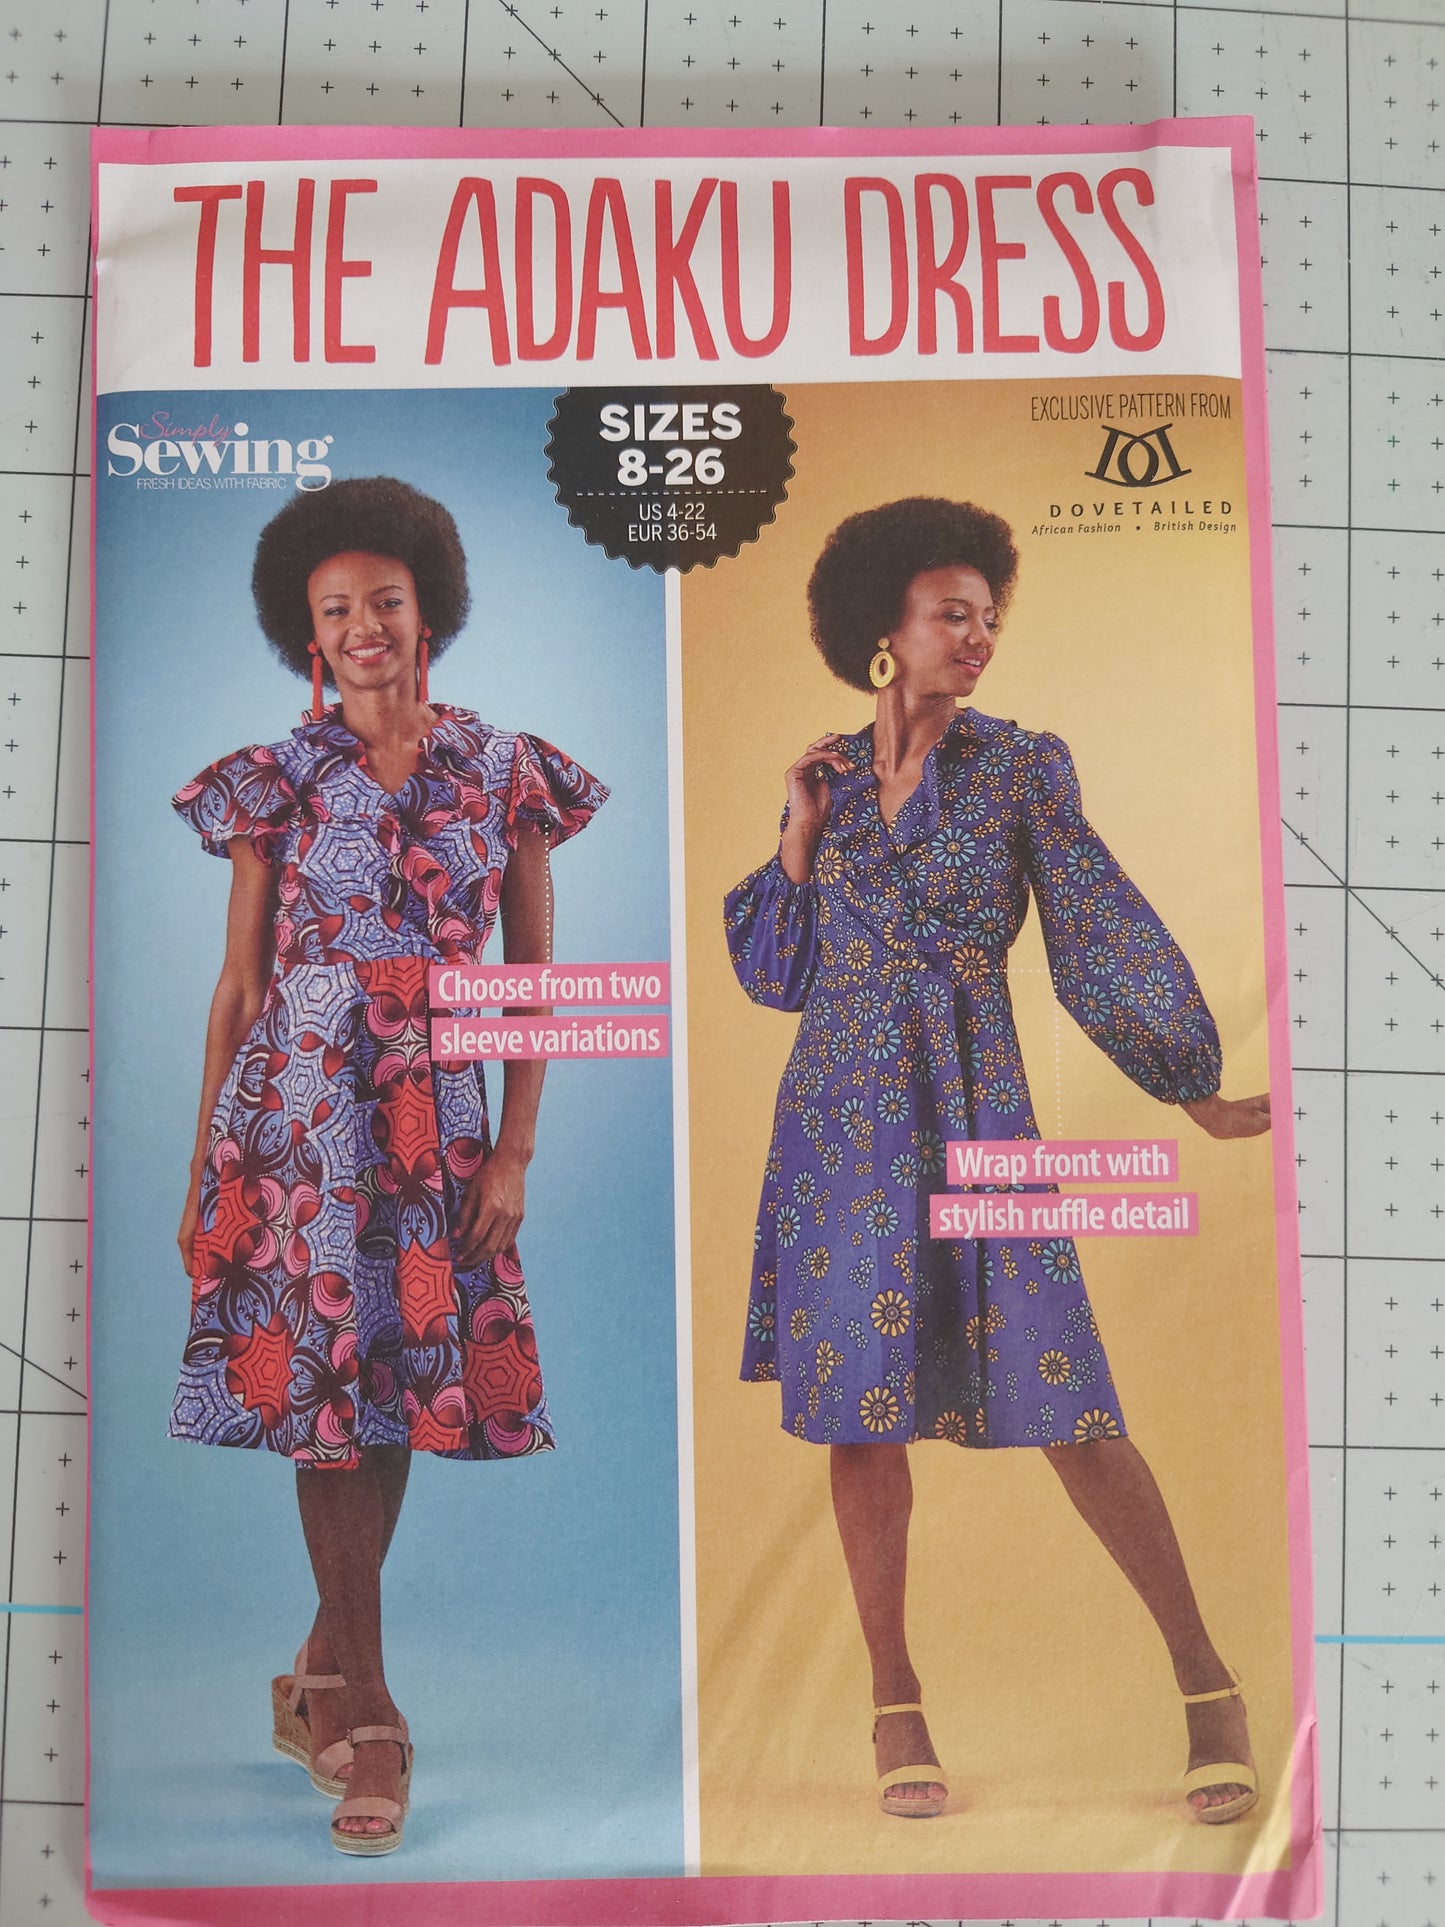 The Adaku Dress